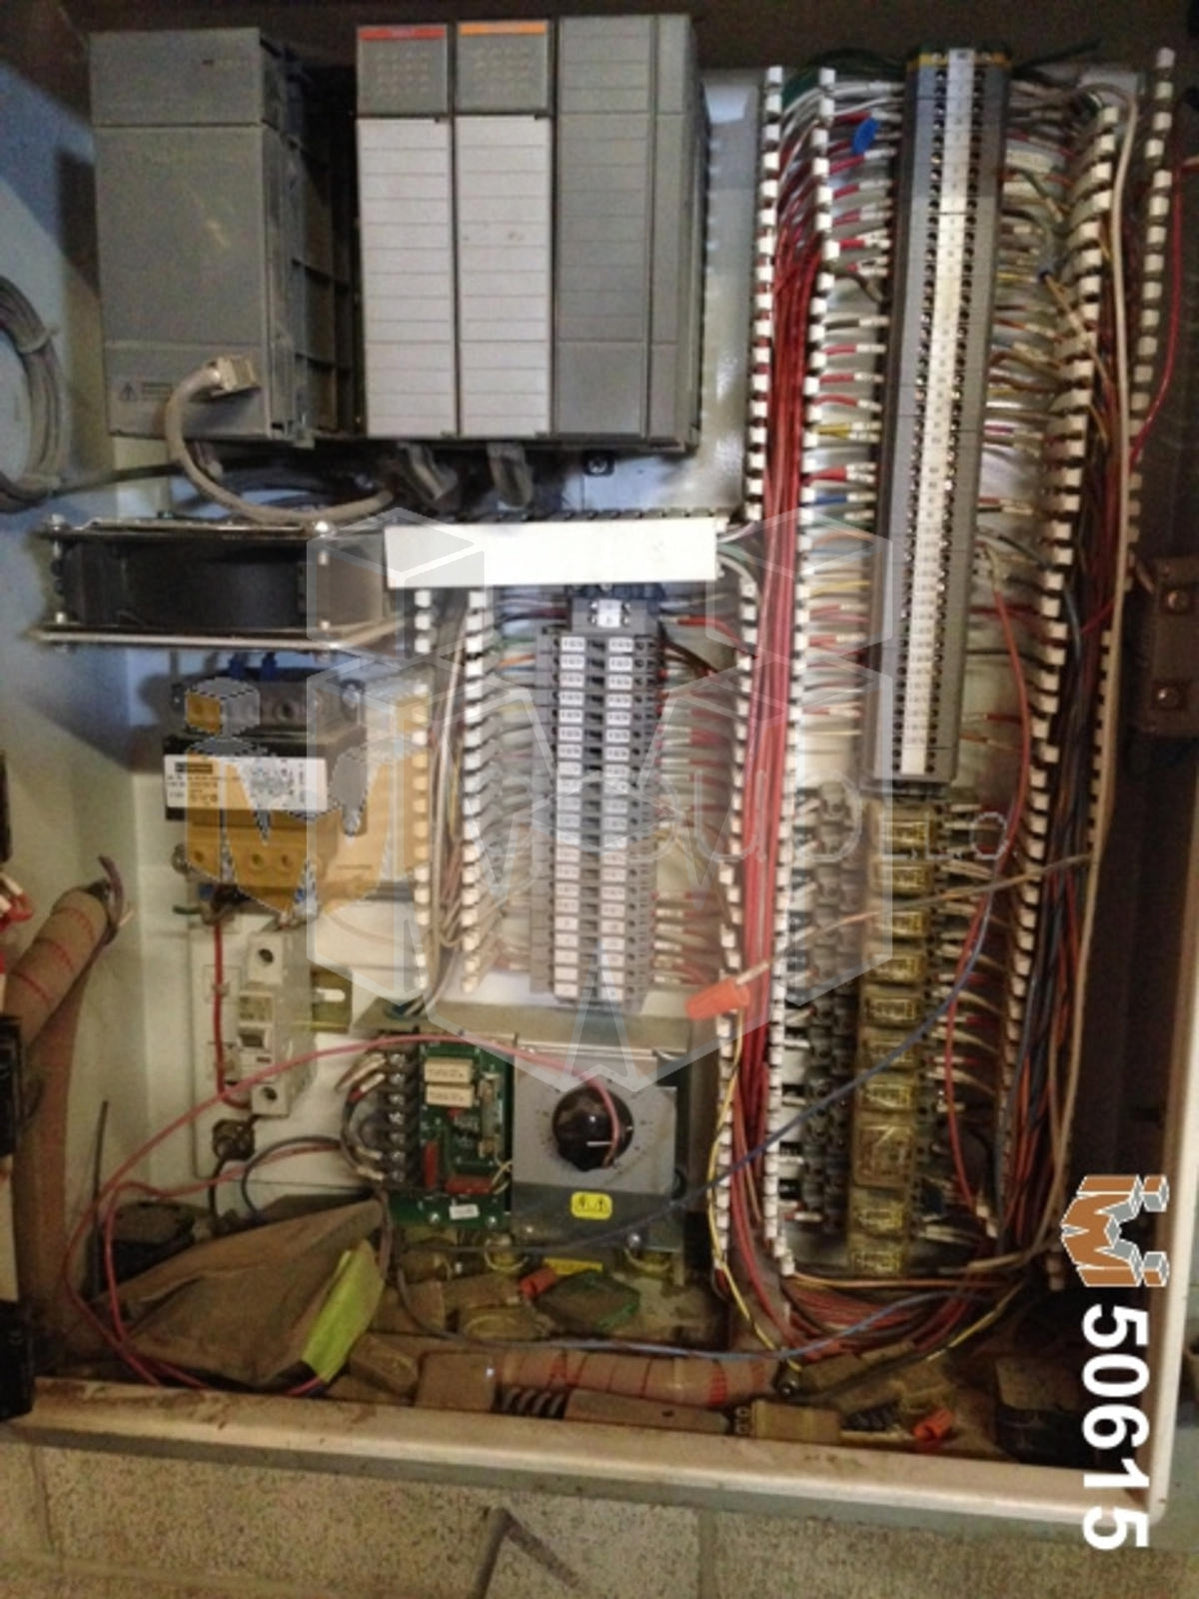 Allen Bradley SLC 501 Control Panel